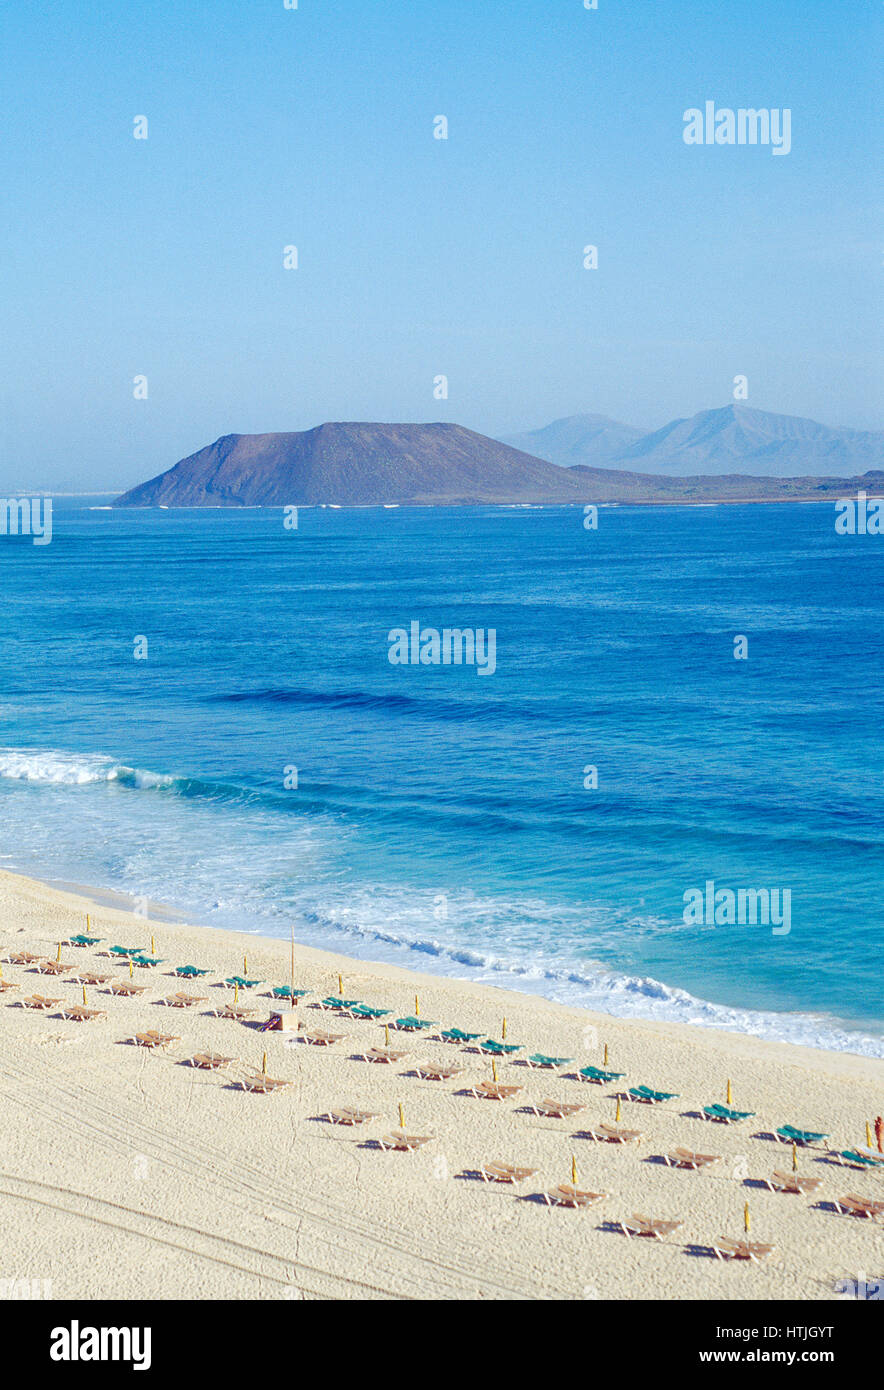 Corralejo beach and Lobos island. Fuerteventura island, Canary Islands, Spain. Stock Photo